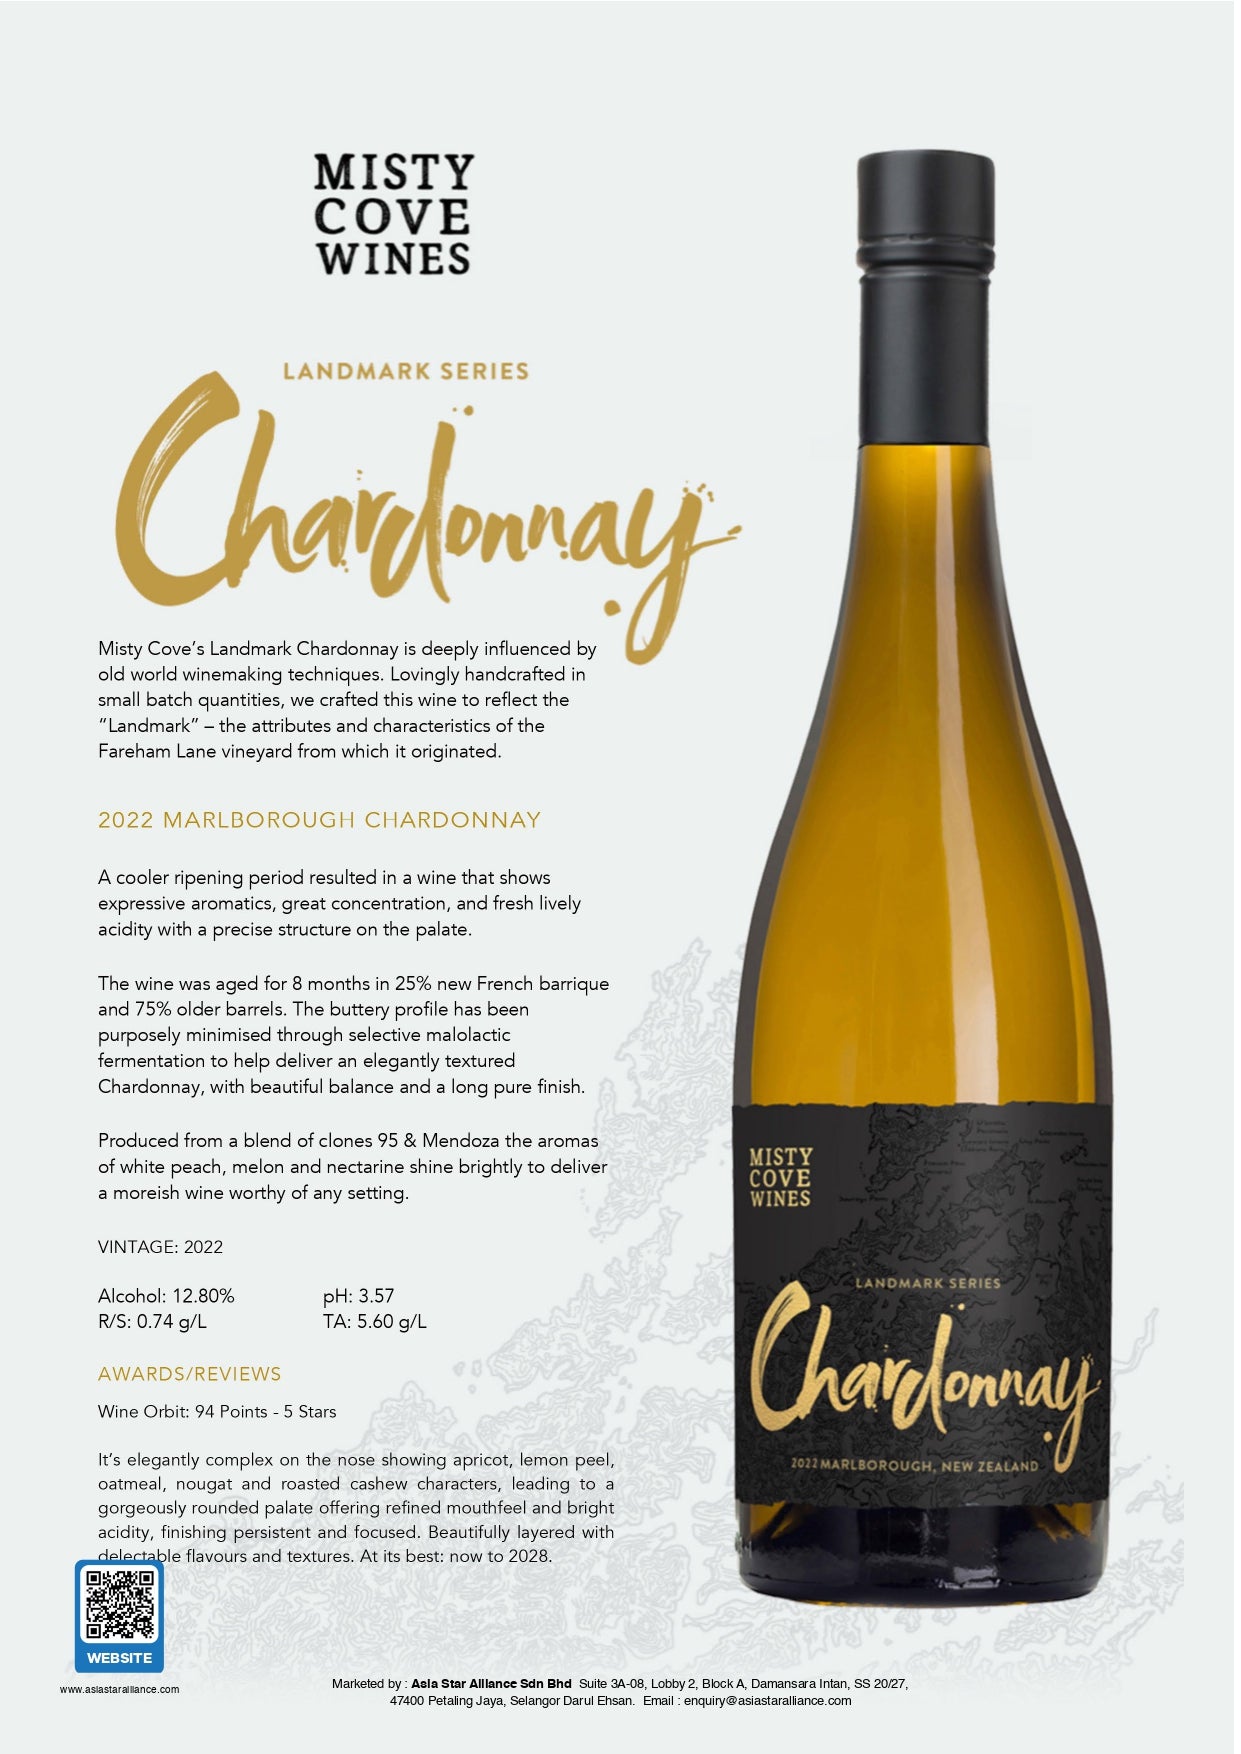 Misty Cove Wines - Landmark Series Chardonnay [750ml]